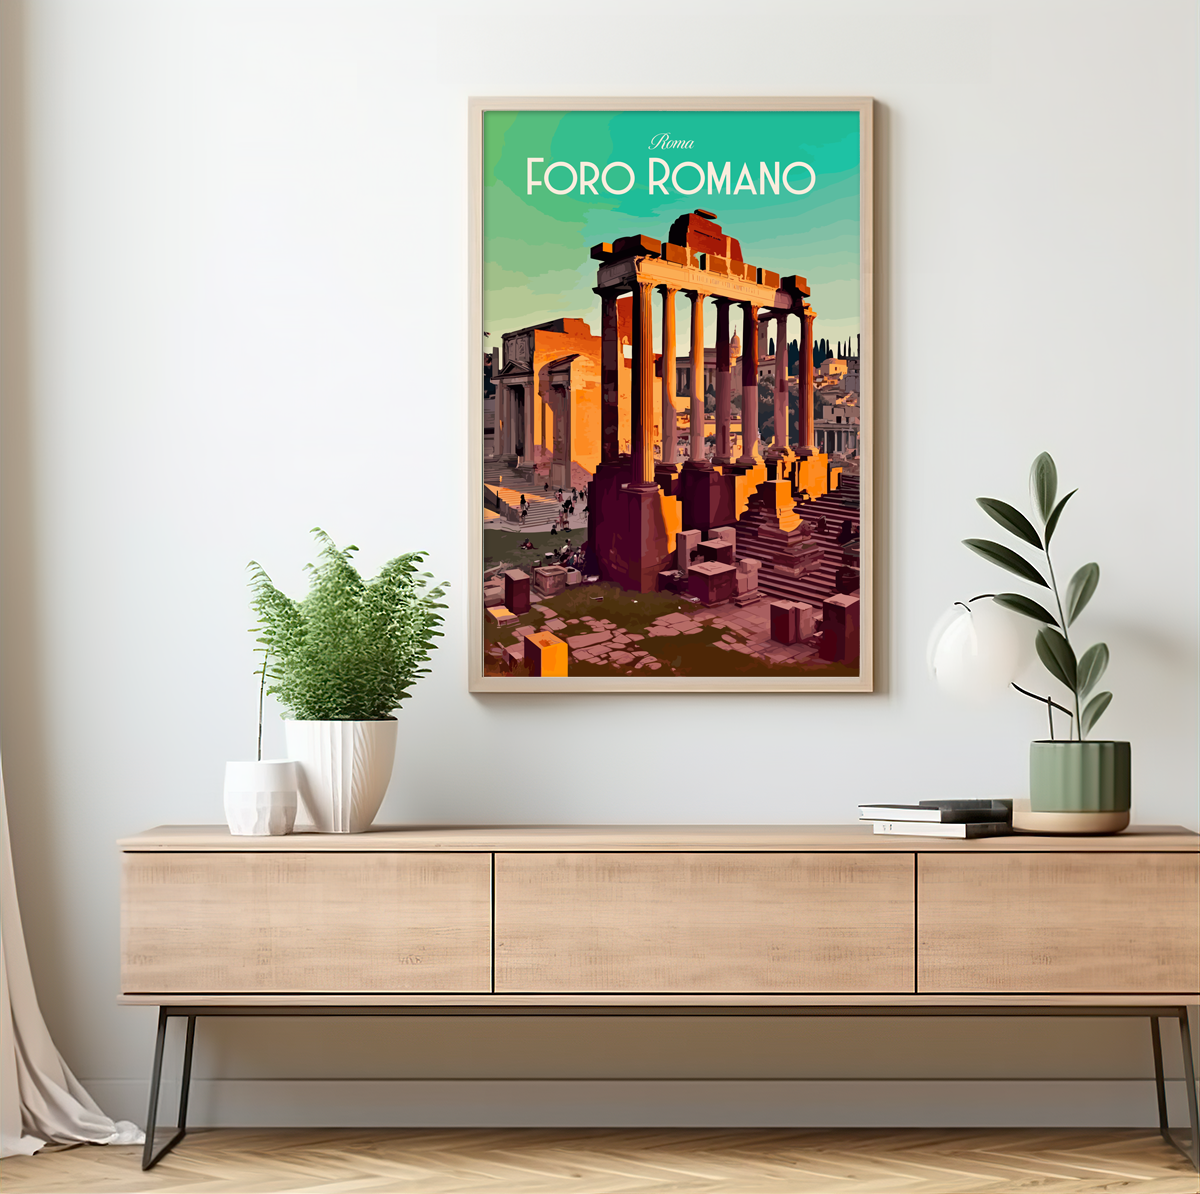 Roma - Foro Romano poster by bon voyage design